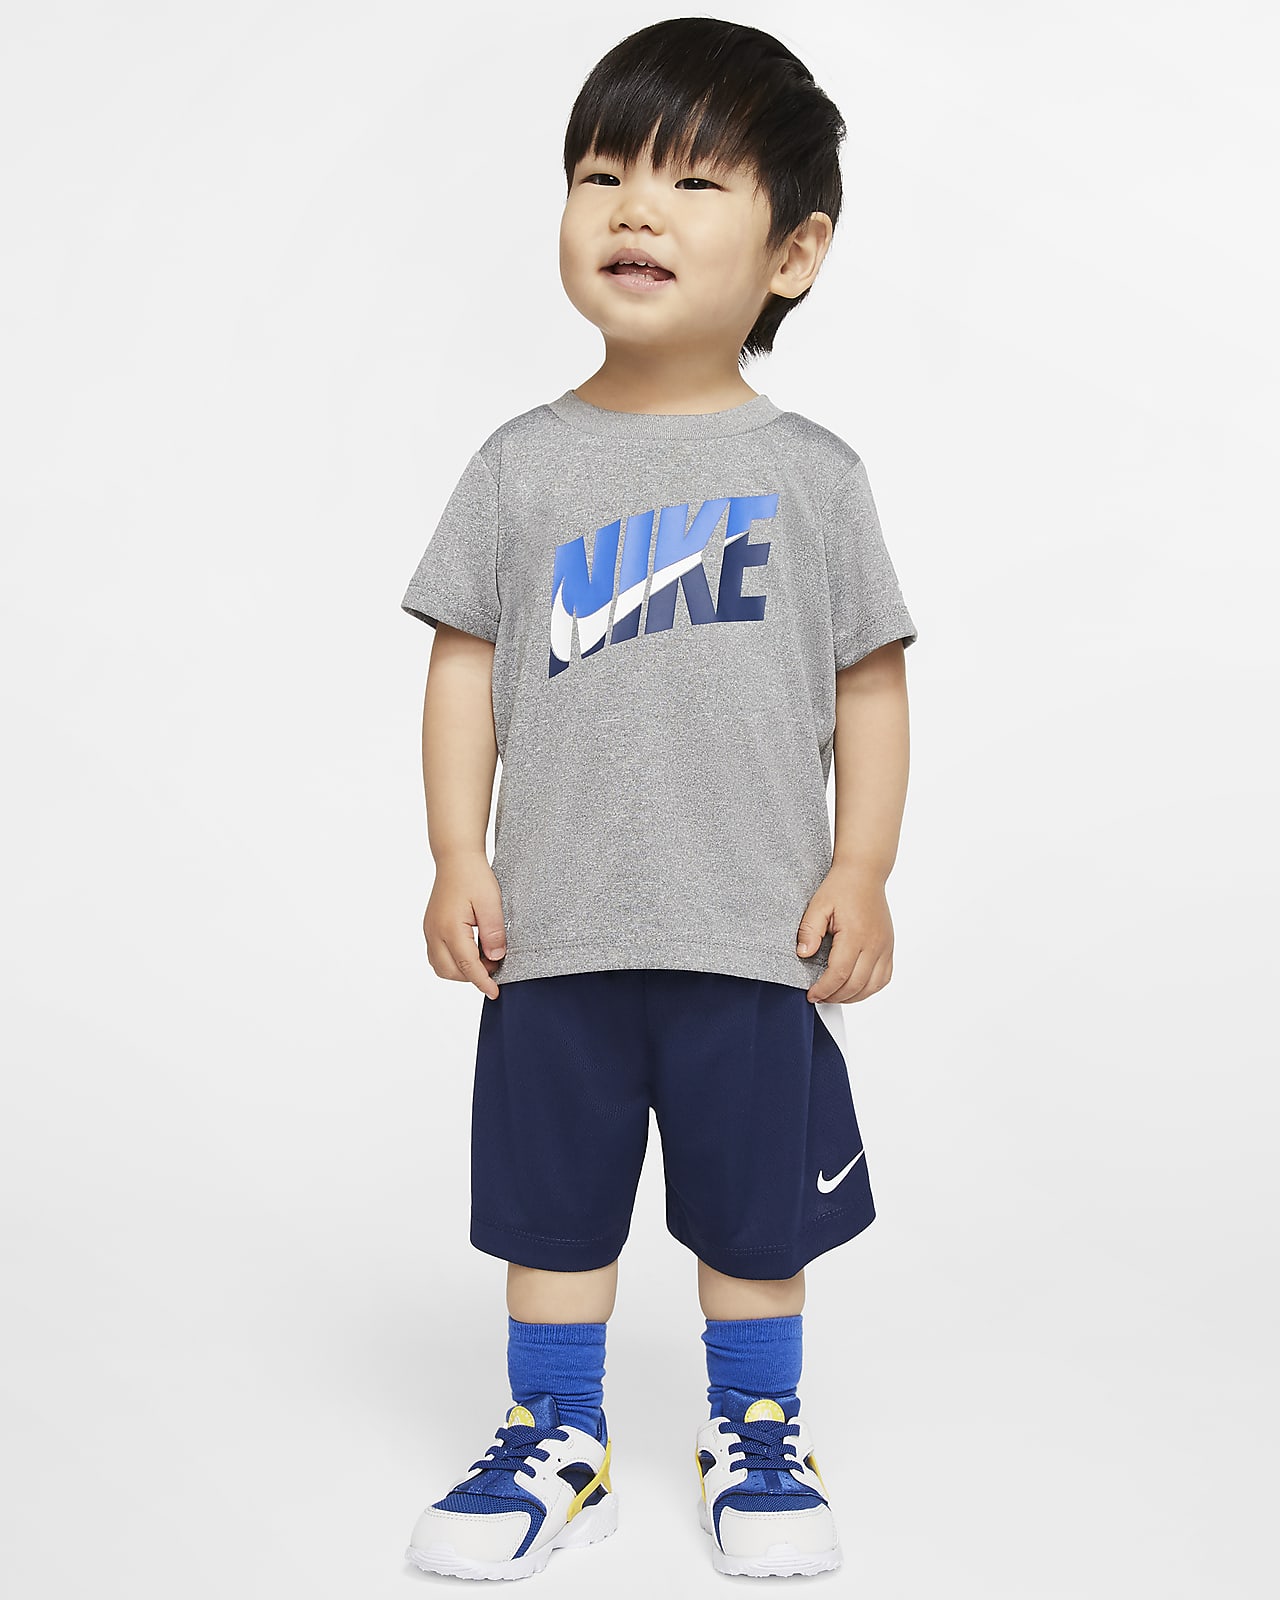 Nike Dri-FIT Baby (12-24M) T-Shirt and Shorts Set.